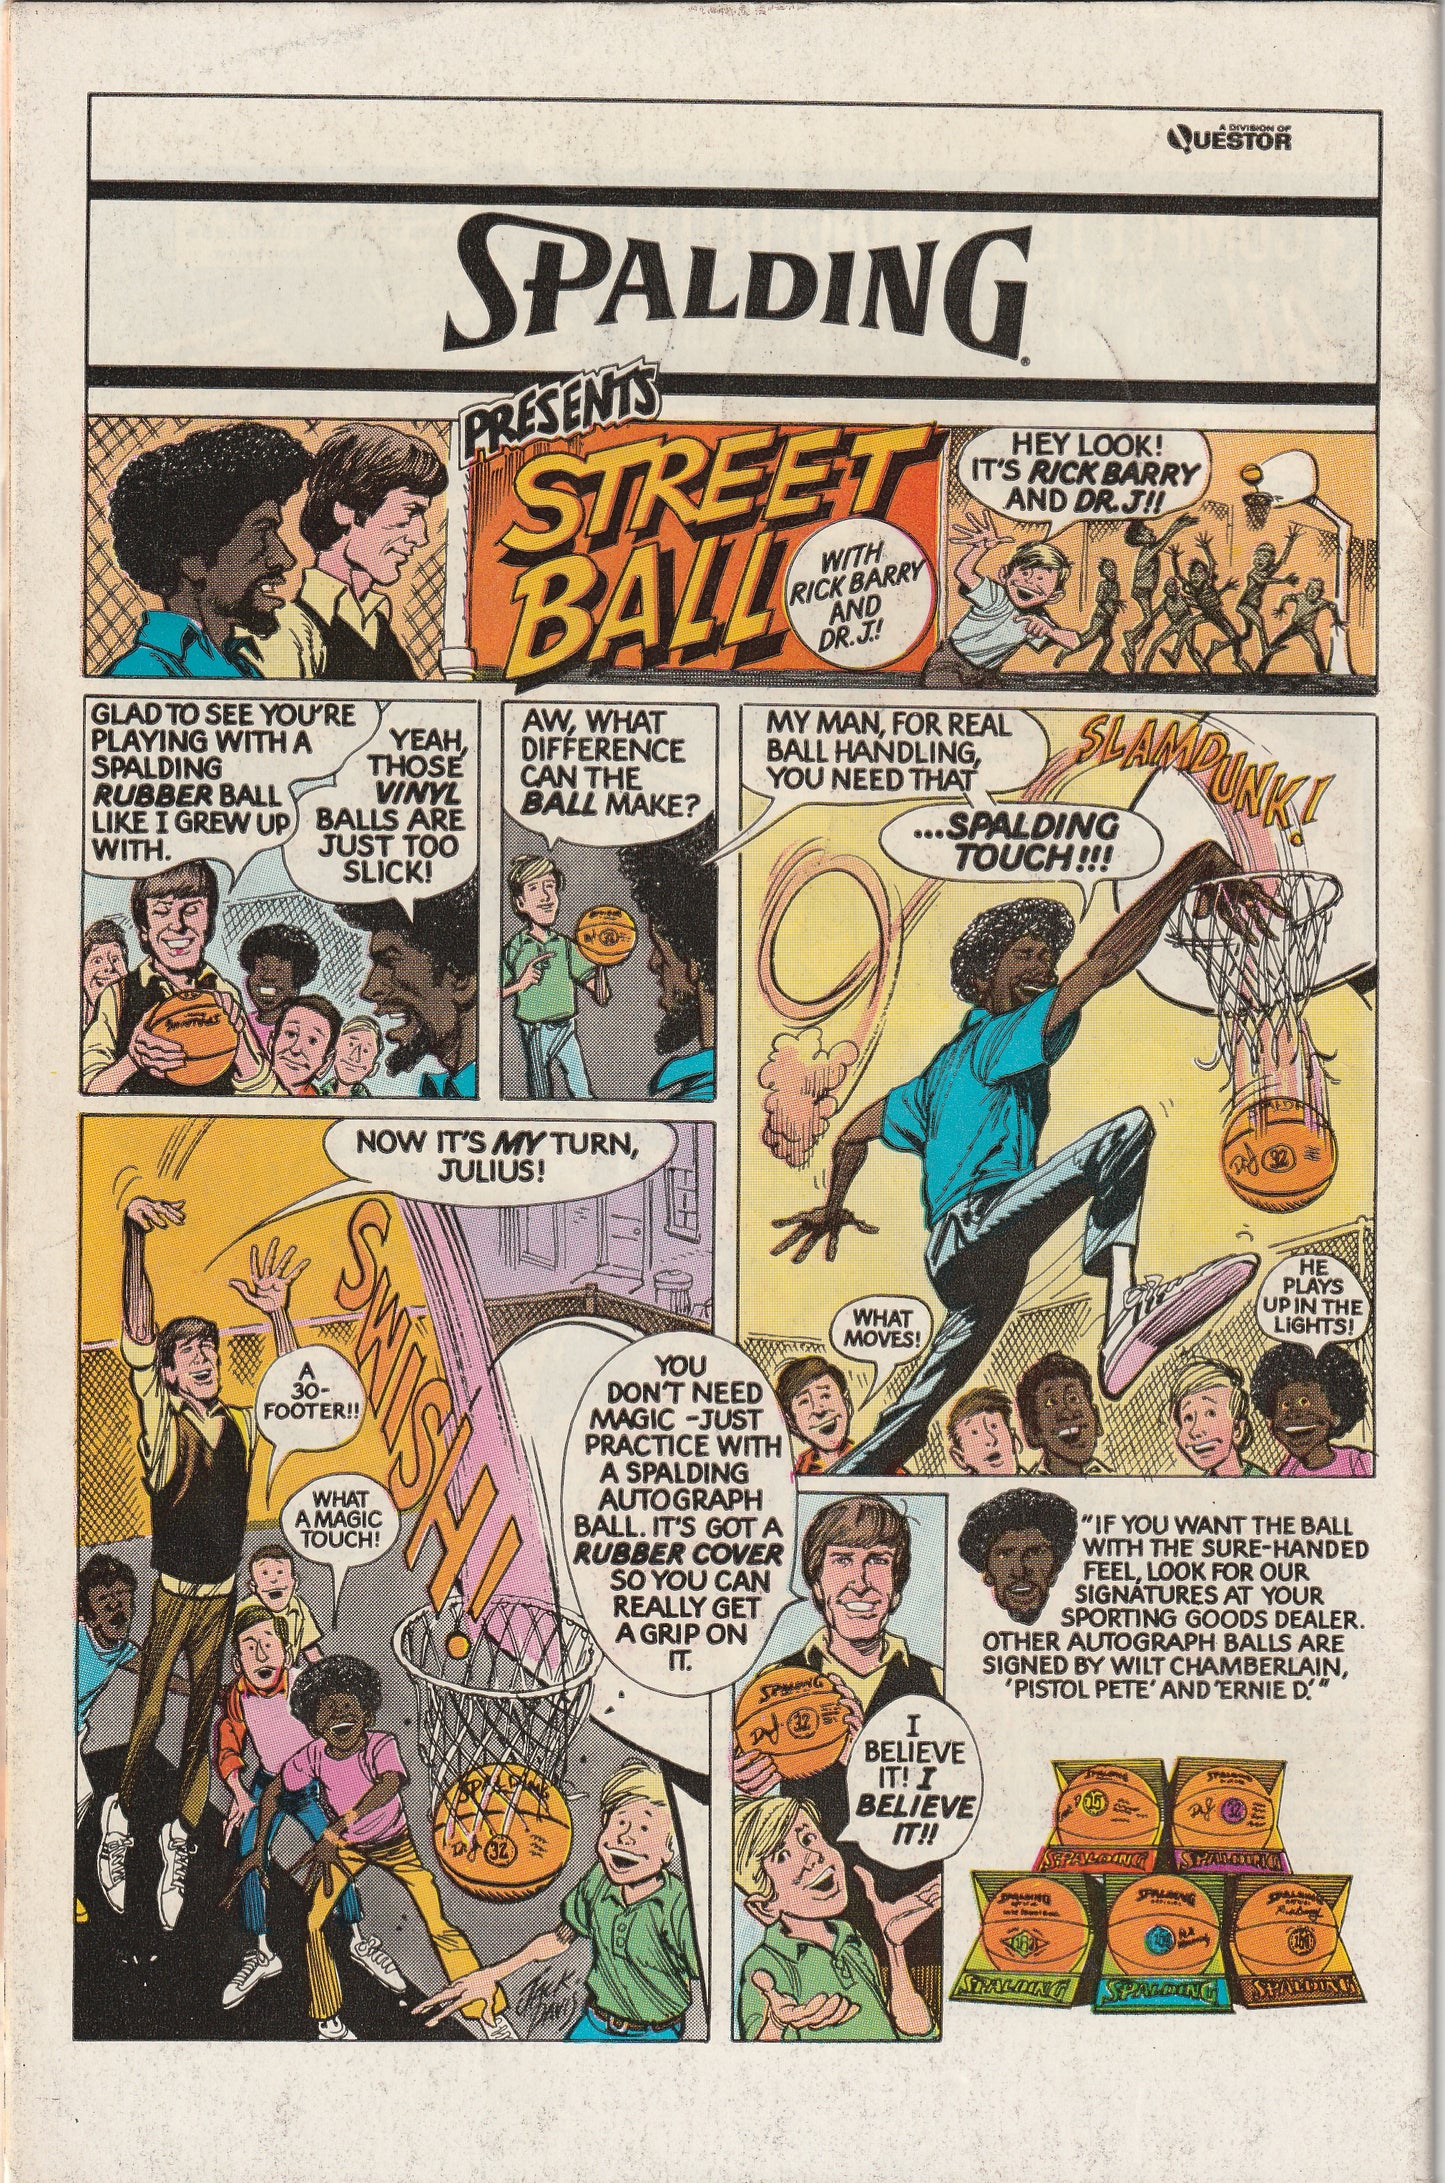 Marvel Team-Up #60 (1977) - Spider-Man & the Wasp - Equinox Origin revealed